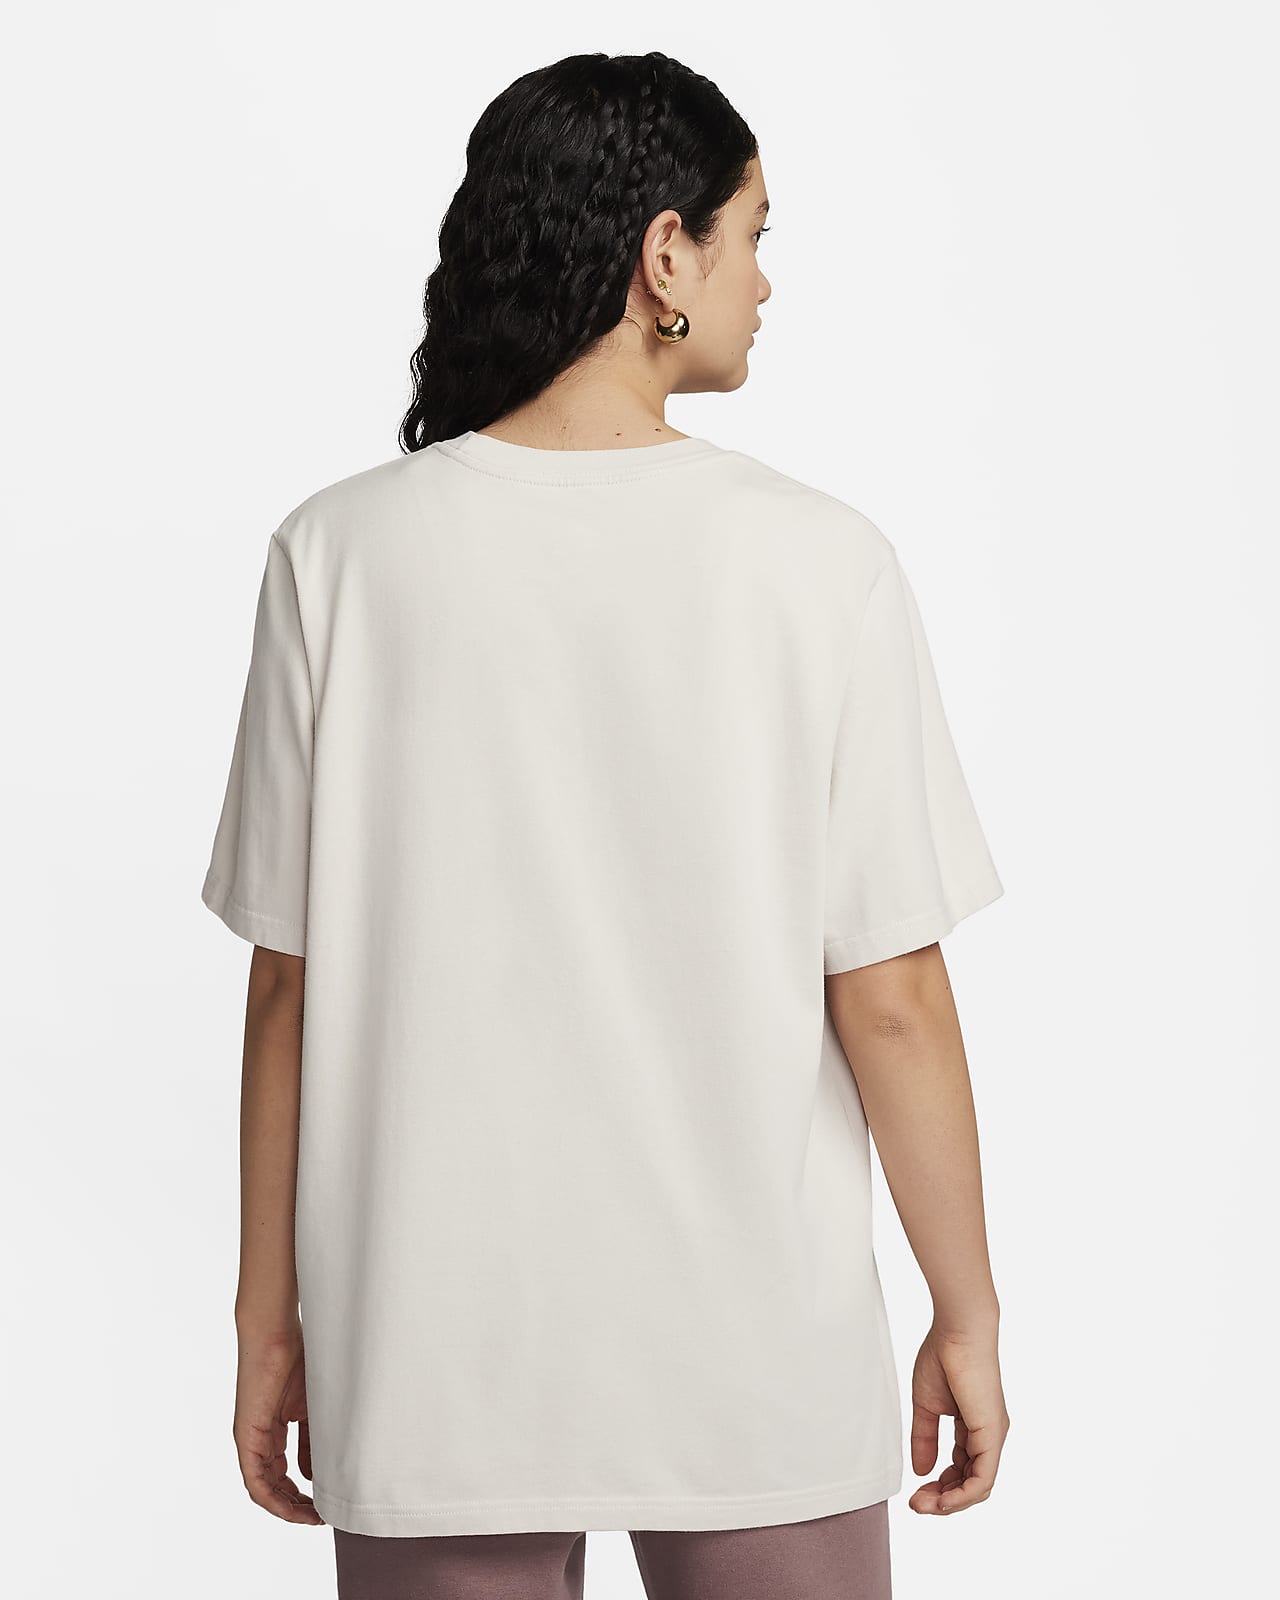 Nike Sportswear Essential Womens T-Shirt - Plus Size - Sangria/White